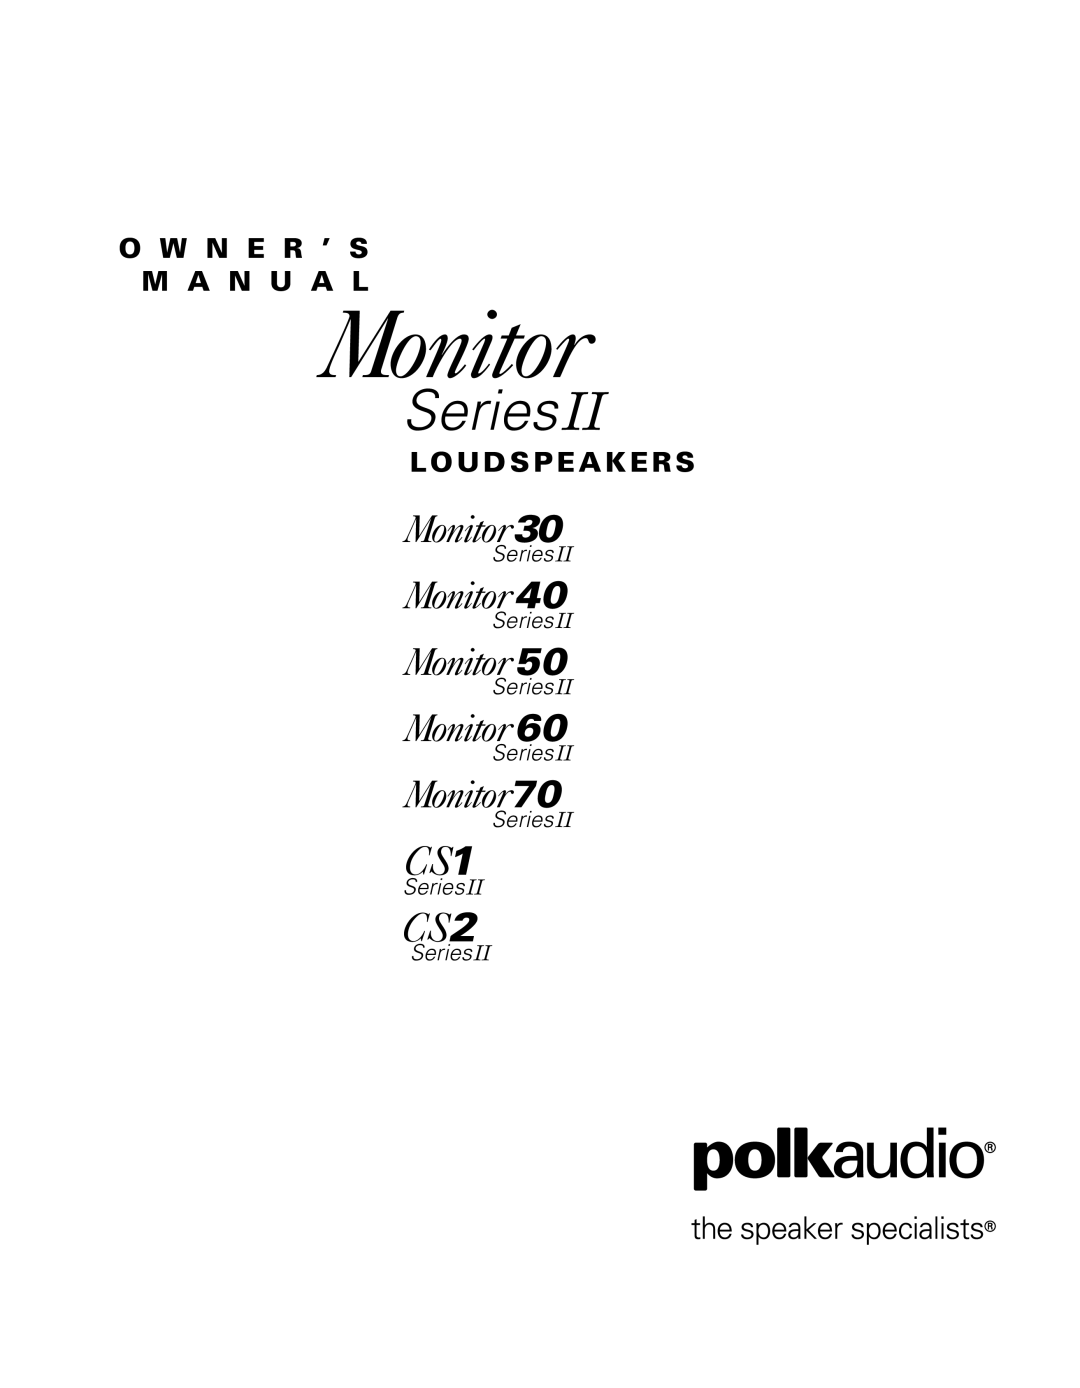 Polk Audio AM6095-B owner manual Monitor Series, MONITOR MONITOR MONITOR MONITOR MONITOR CS1 CS2, Loudspeakers 